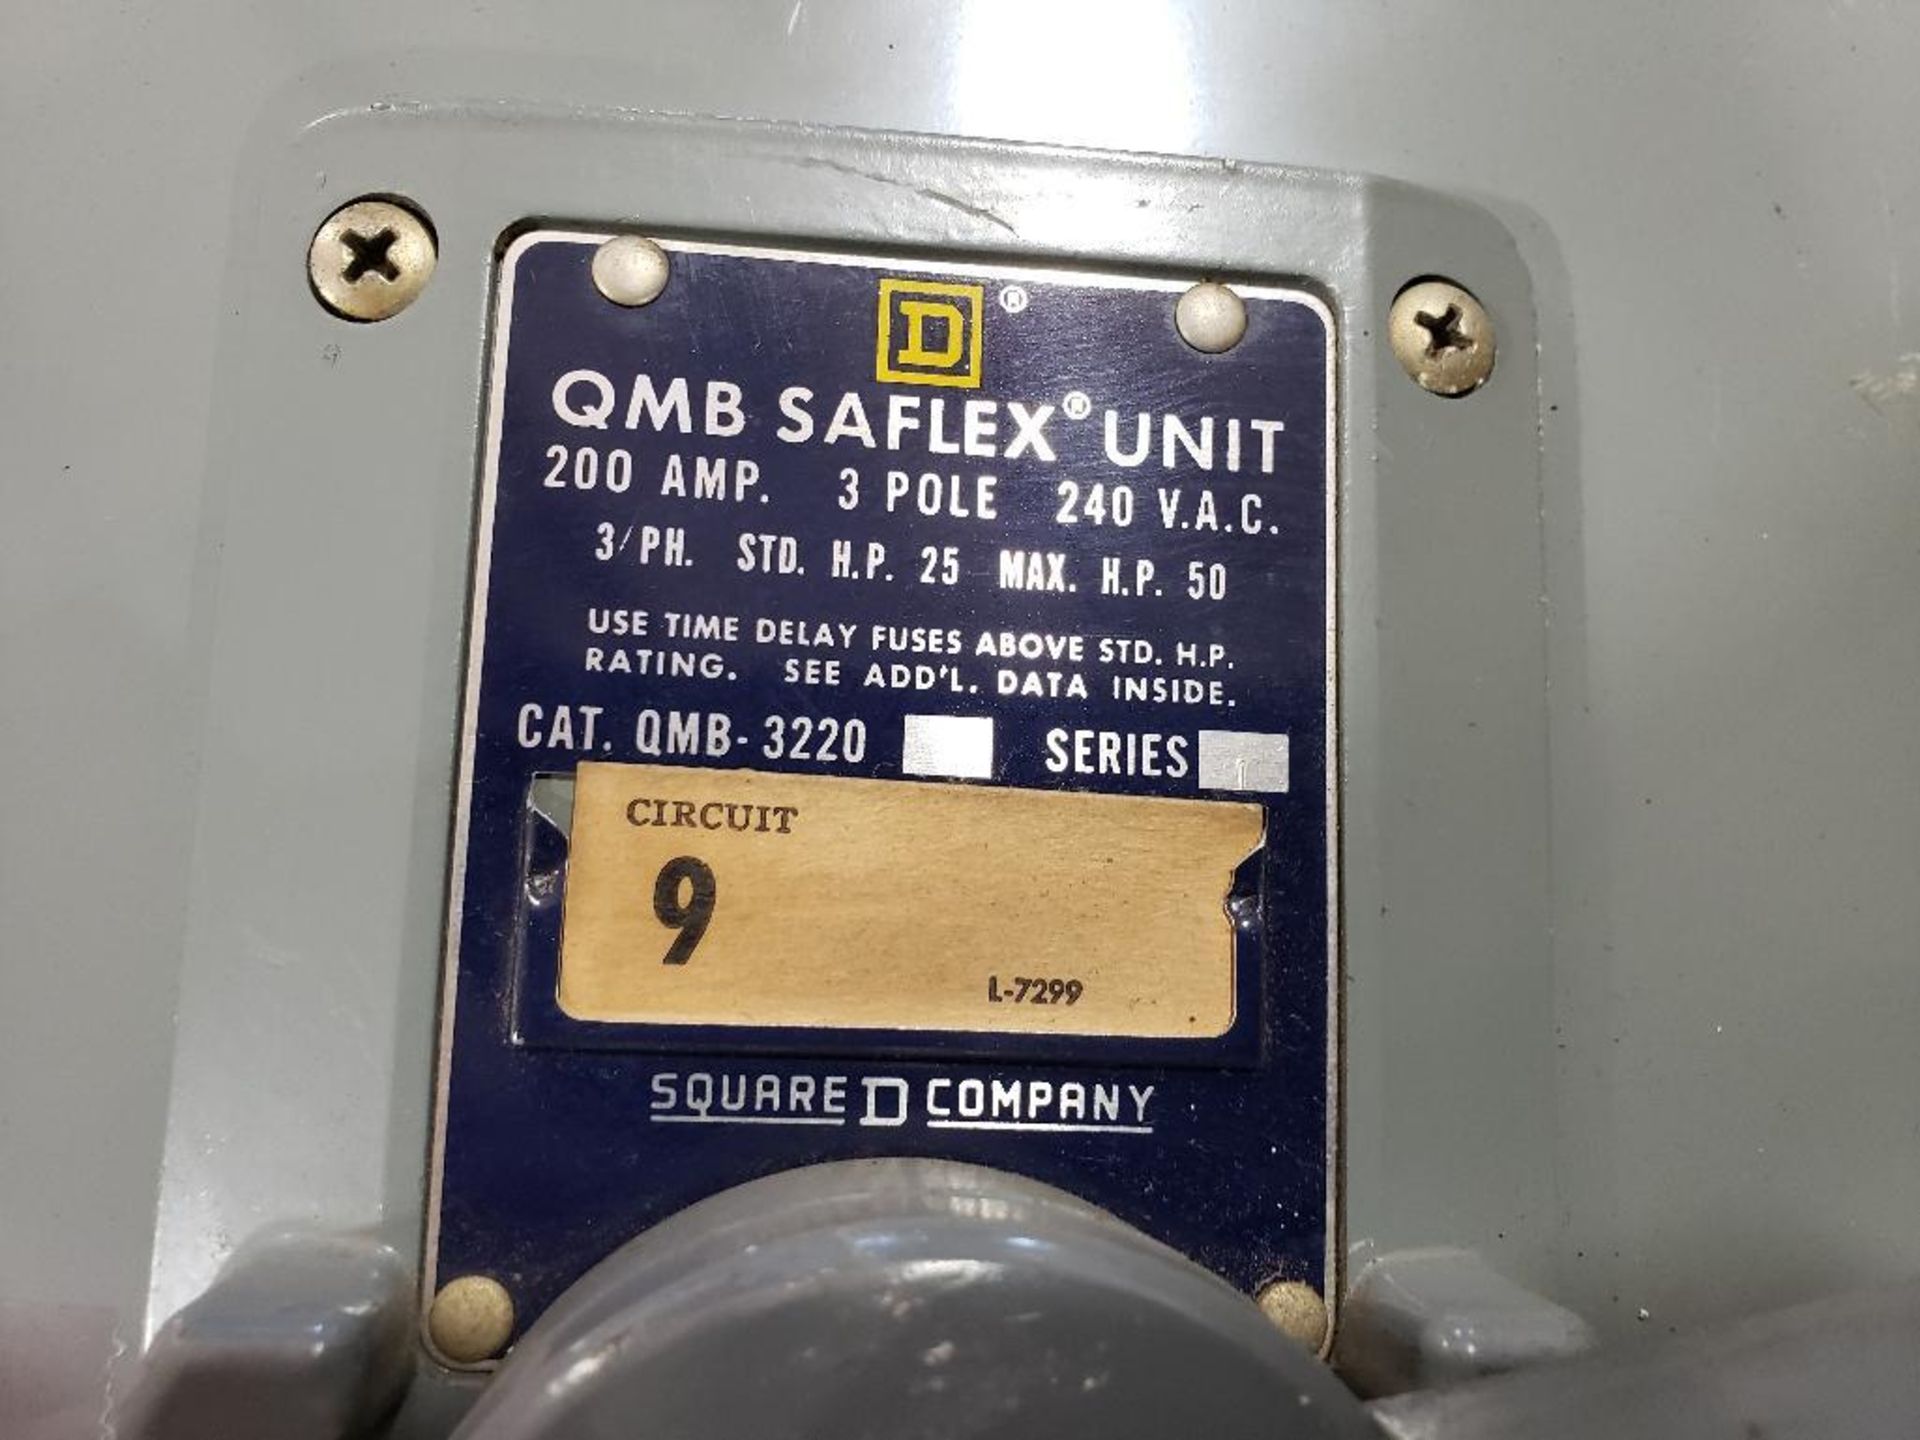 Square D bus plug safety switch. Model QMB-3220 saflex unit. 200amp, 240v, 3 phase. - Image 2 of 4